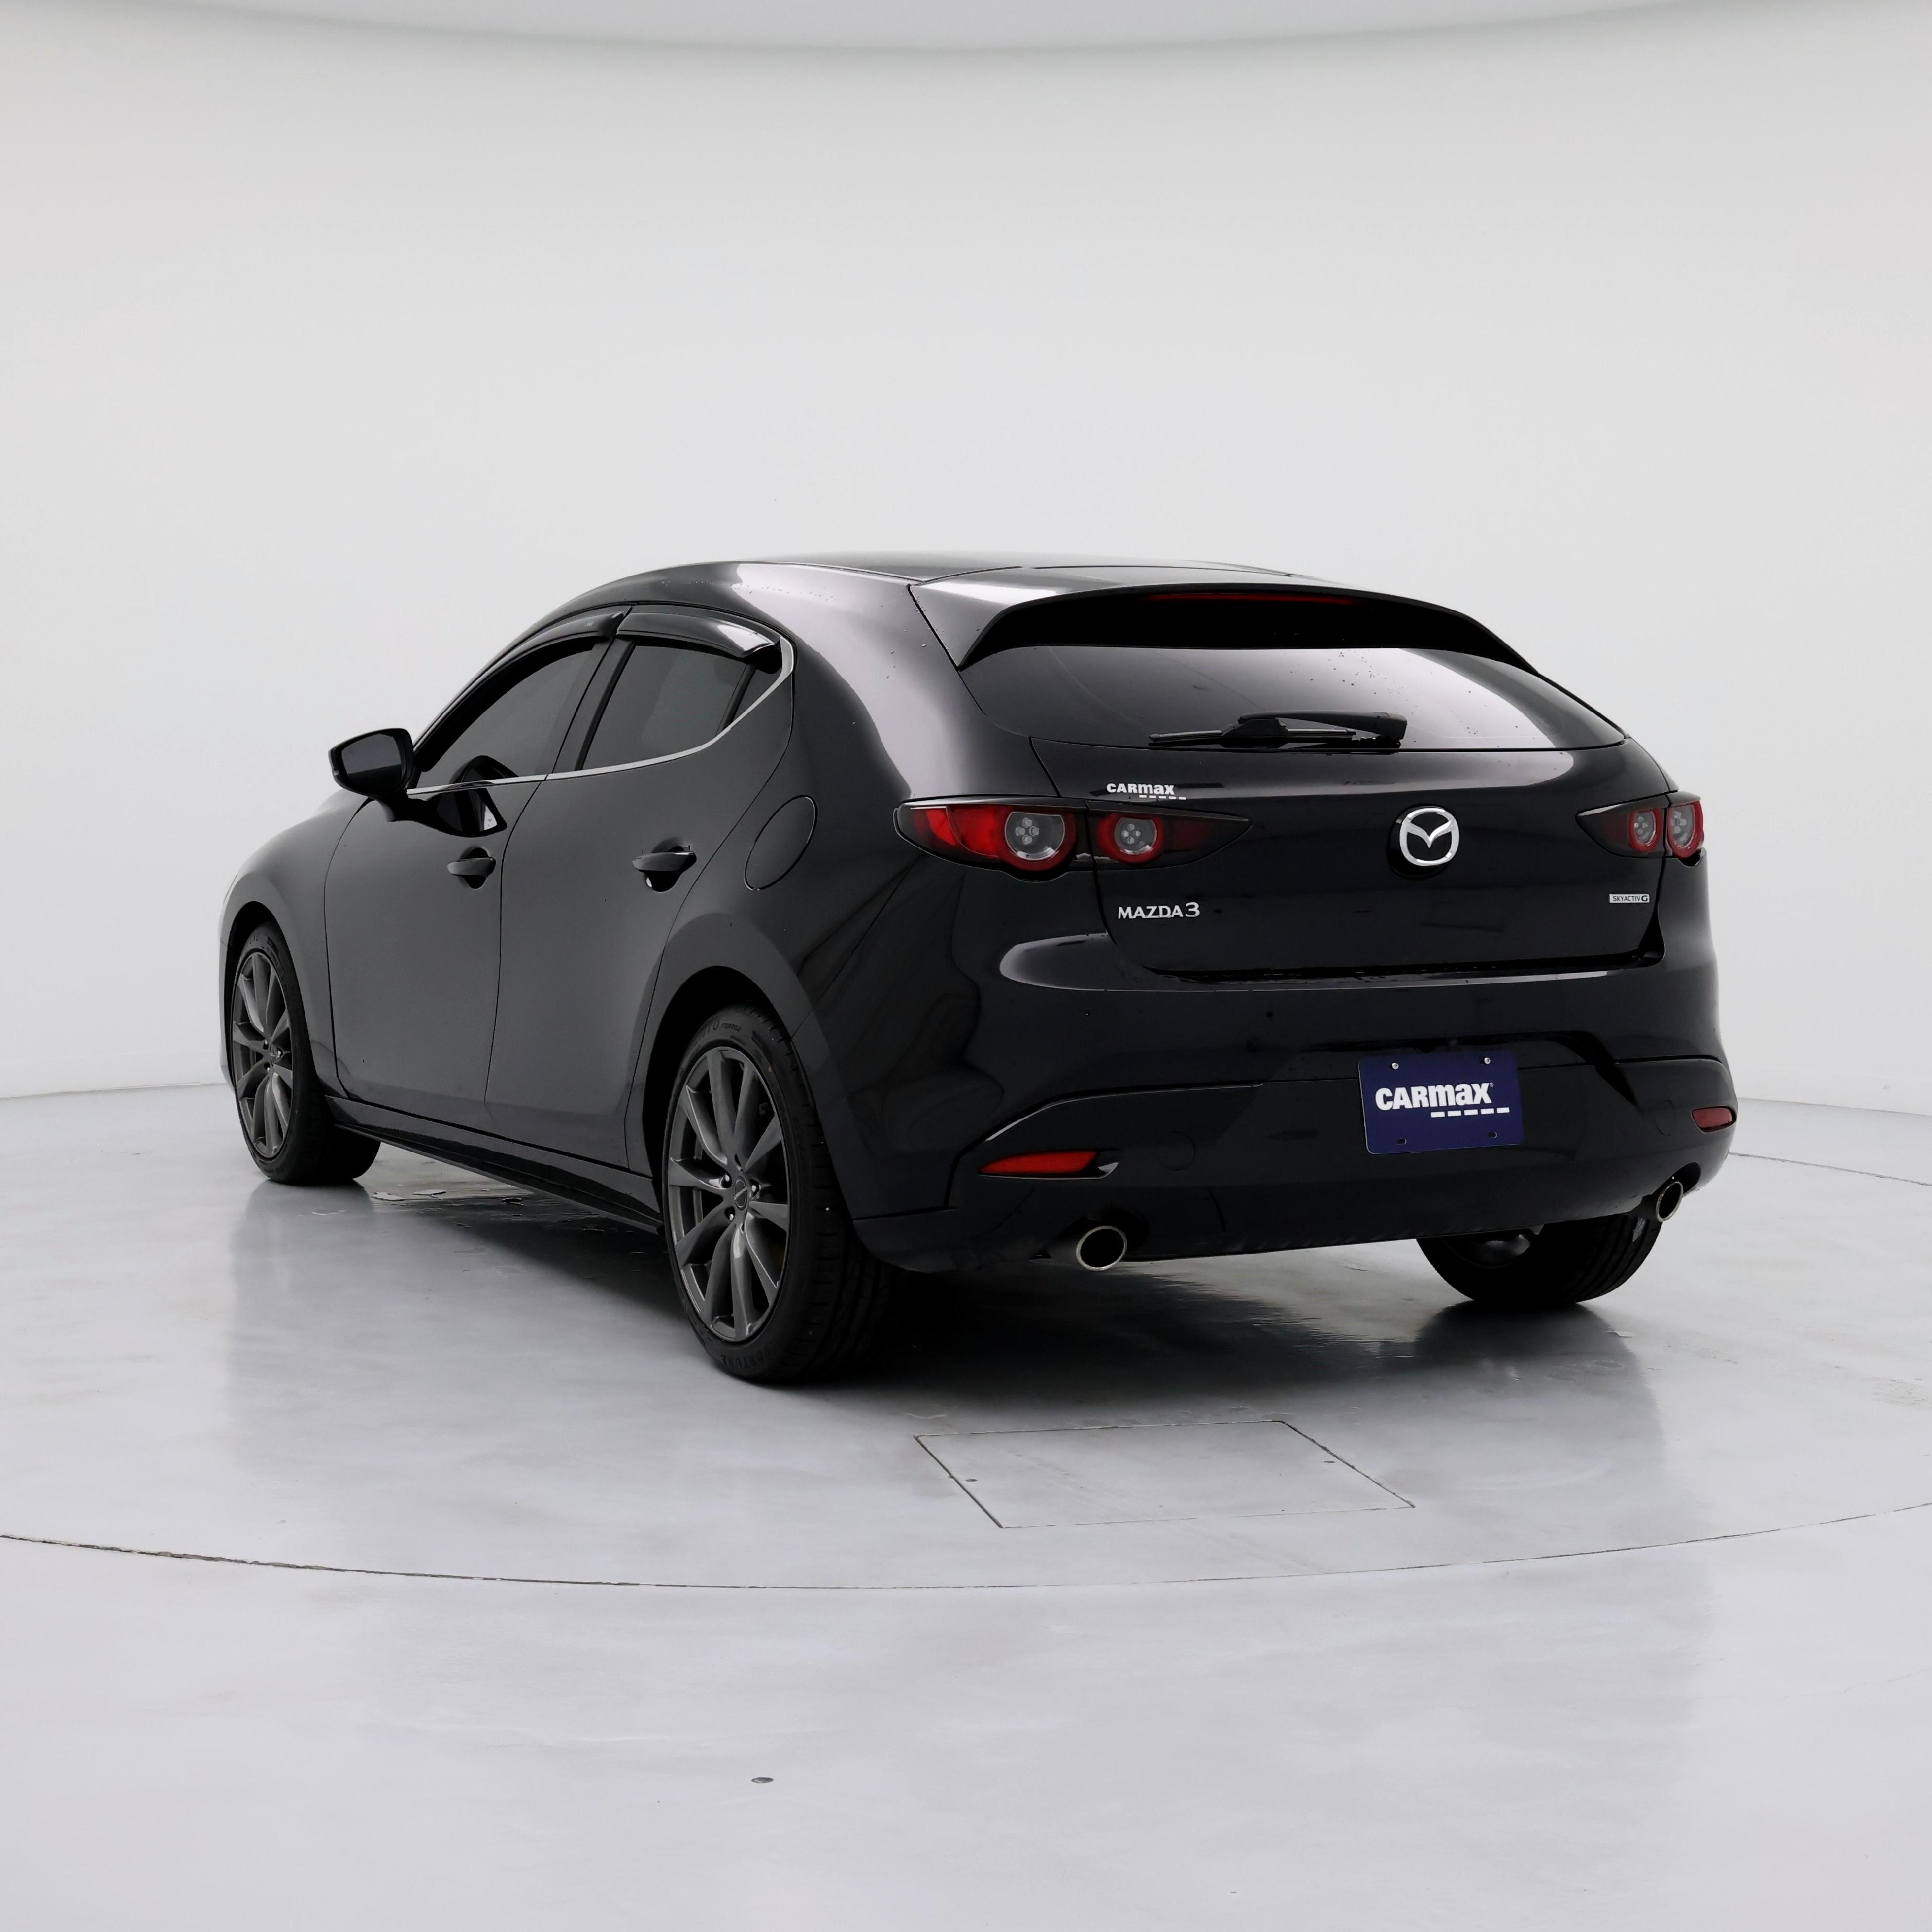 2021 Mazda MAZDA3 Select Hatchback FWD